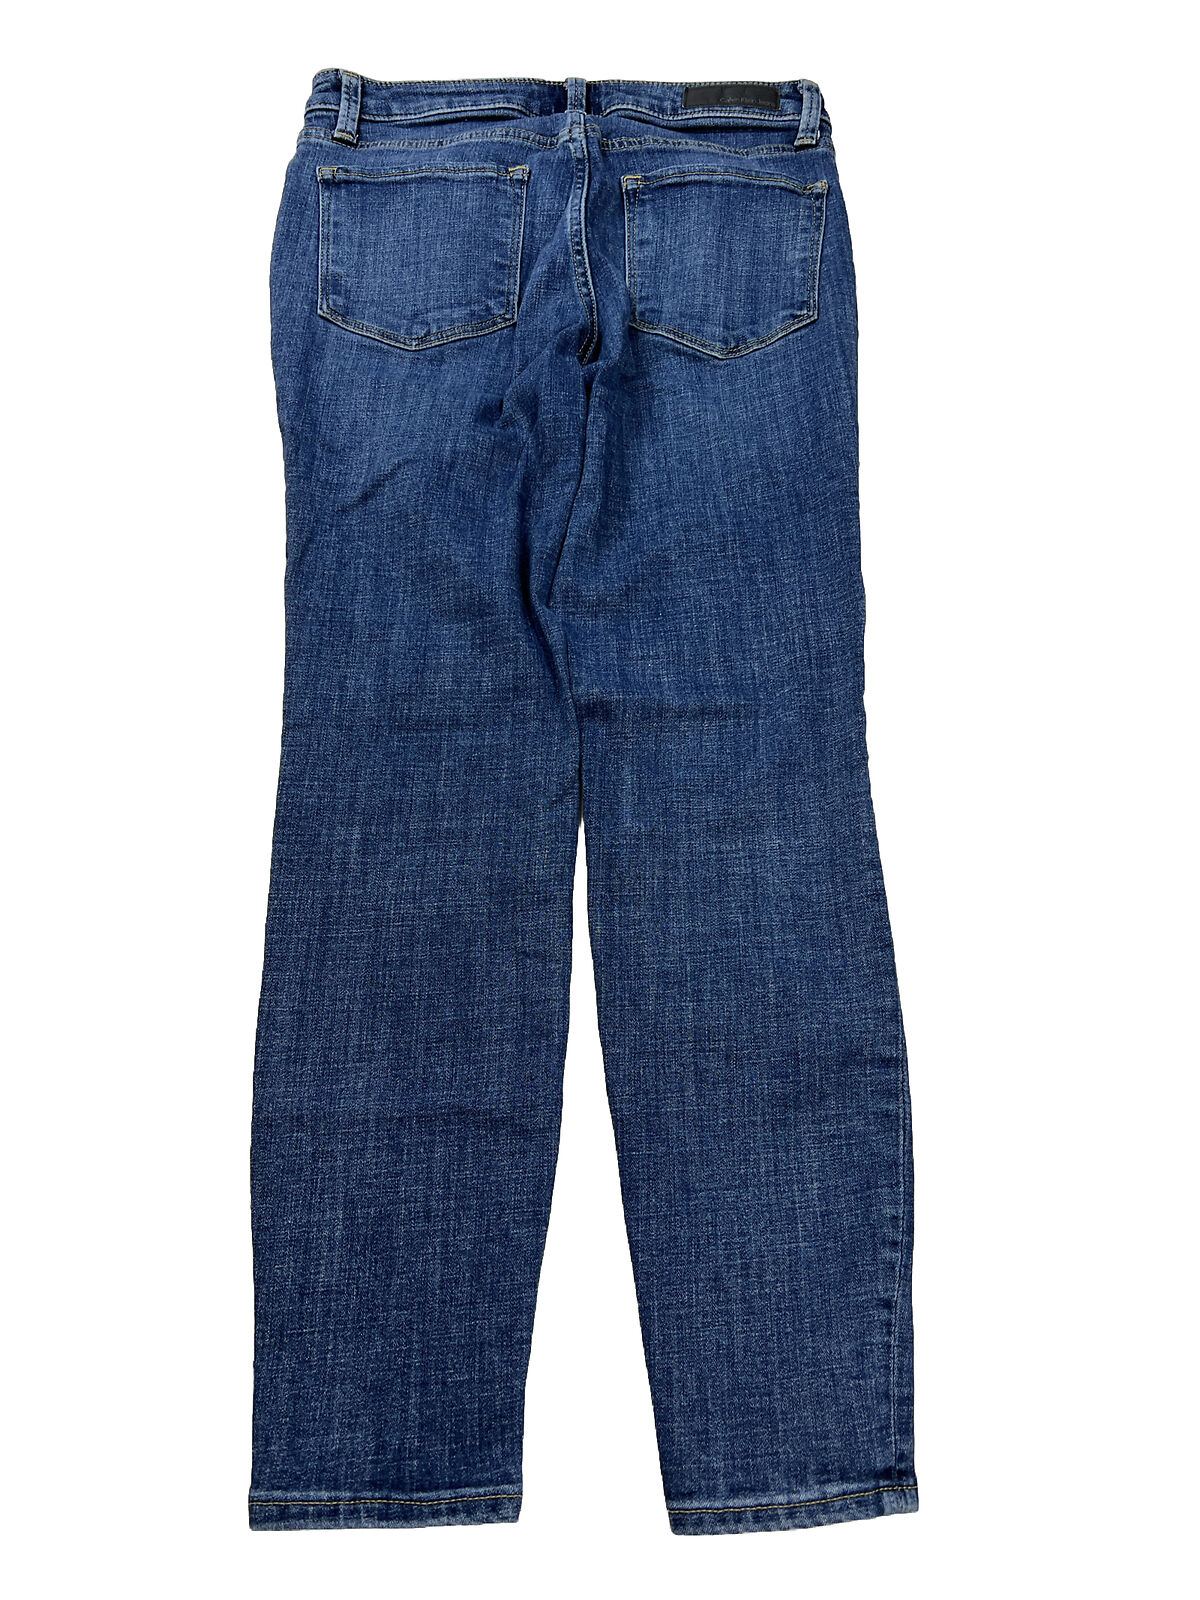 Calvin Klein Jeans ajustados con lavado oscuro para mujer - 6